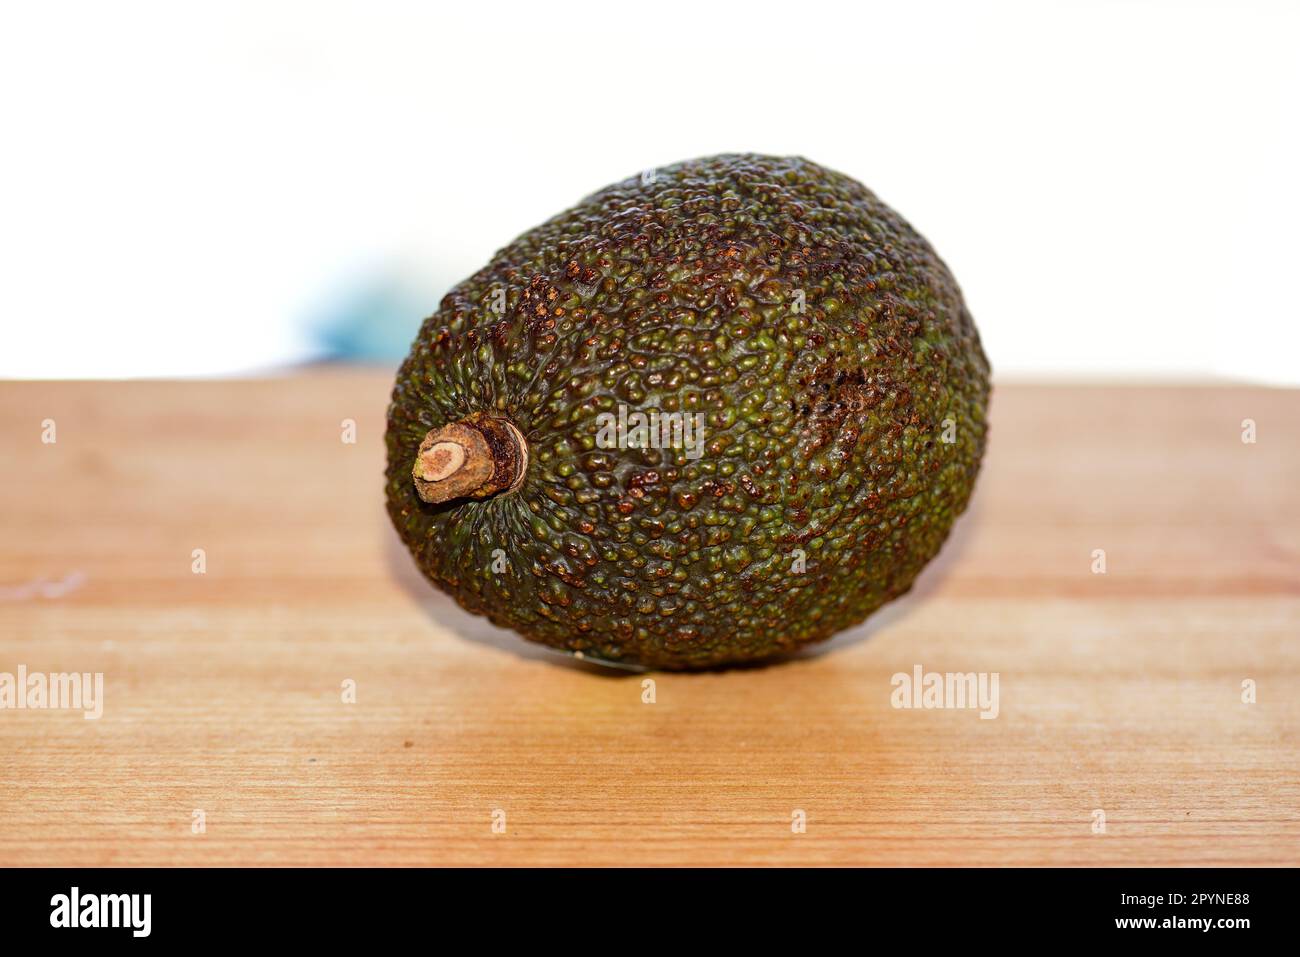 Vegetarian food: Whole fruit of an avocado Stock Photo